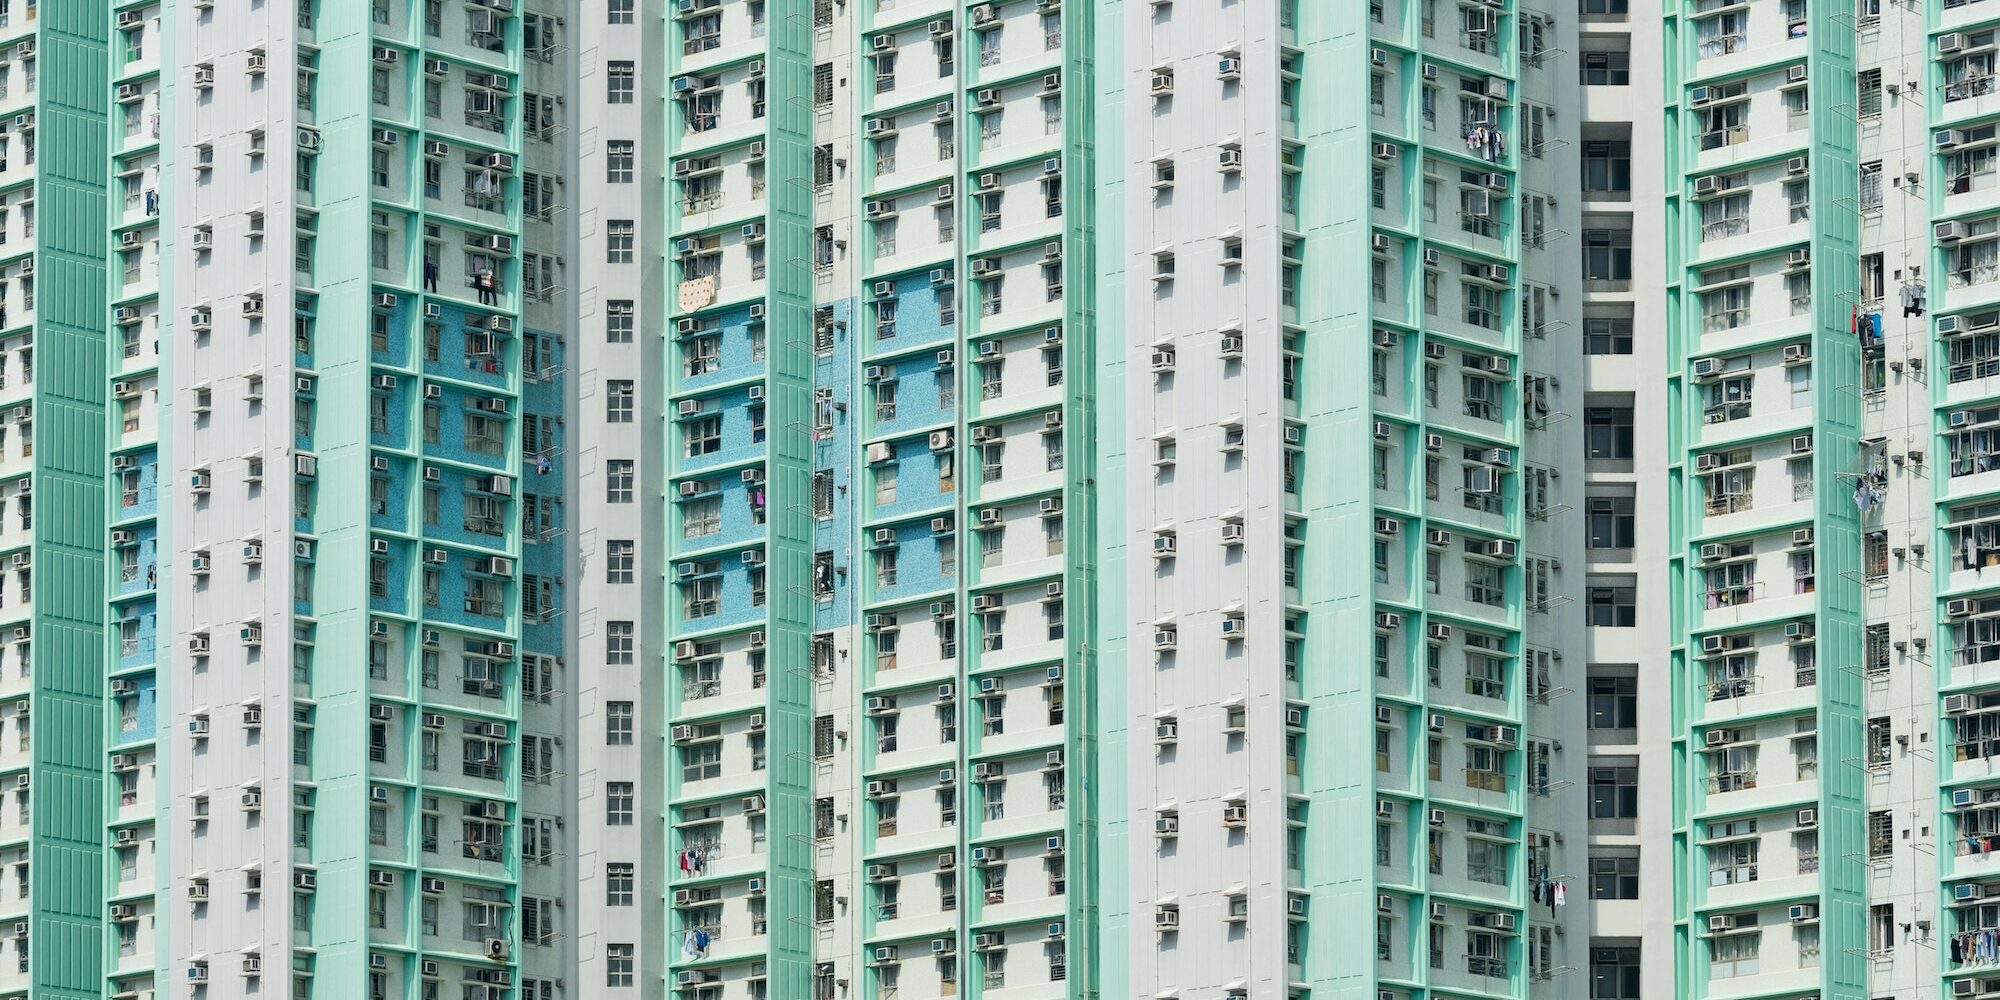 Real estate in Hong Kong